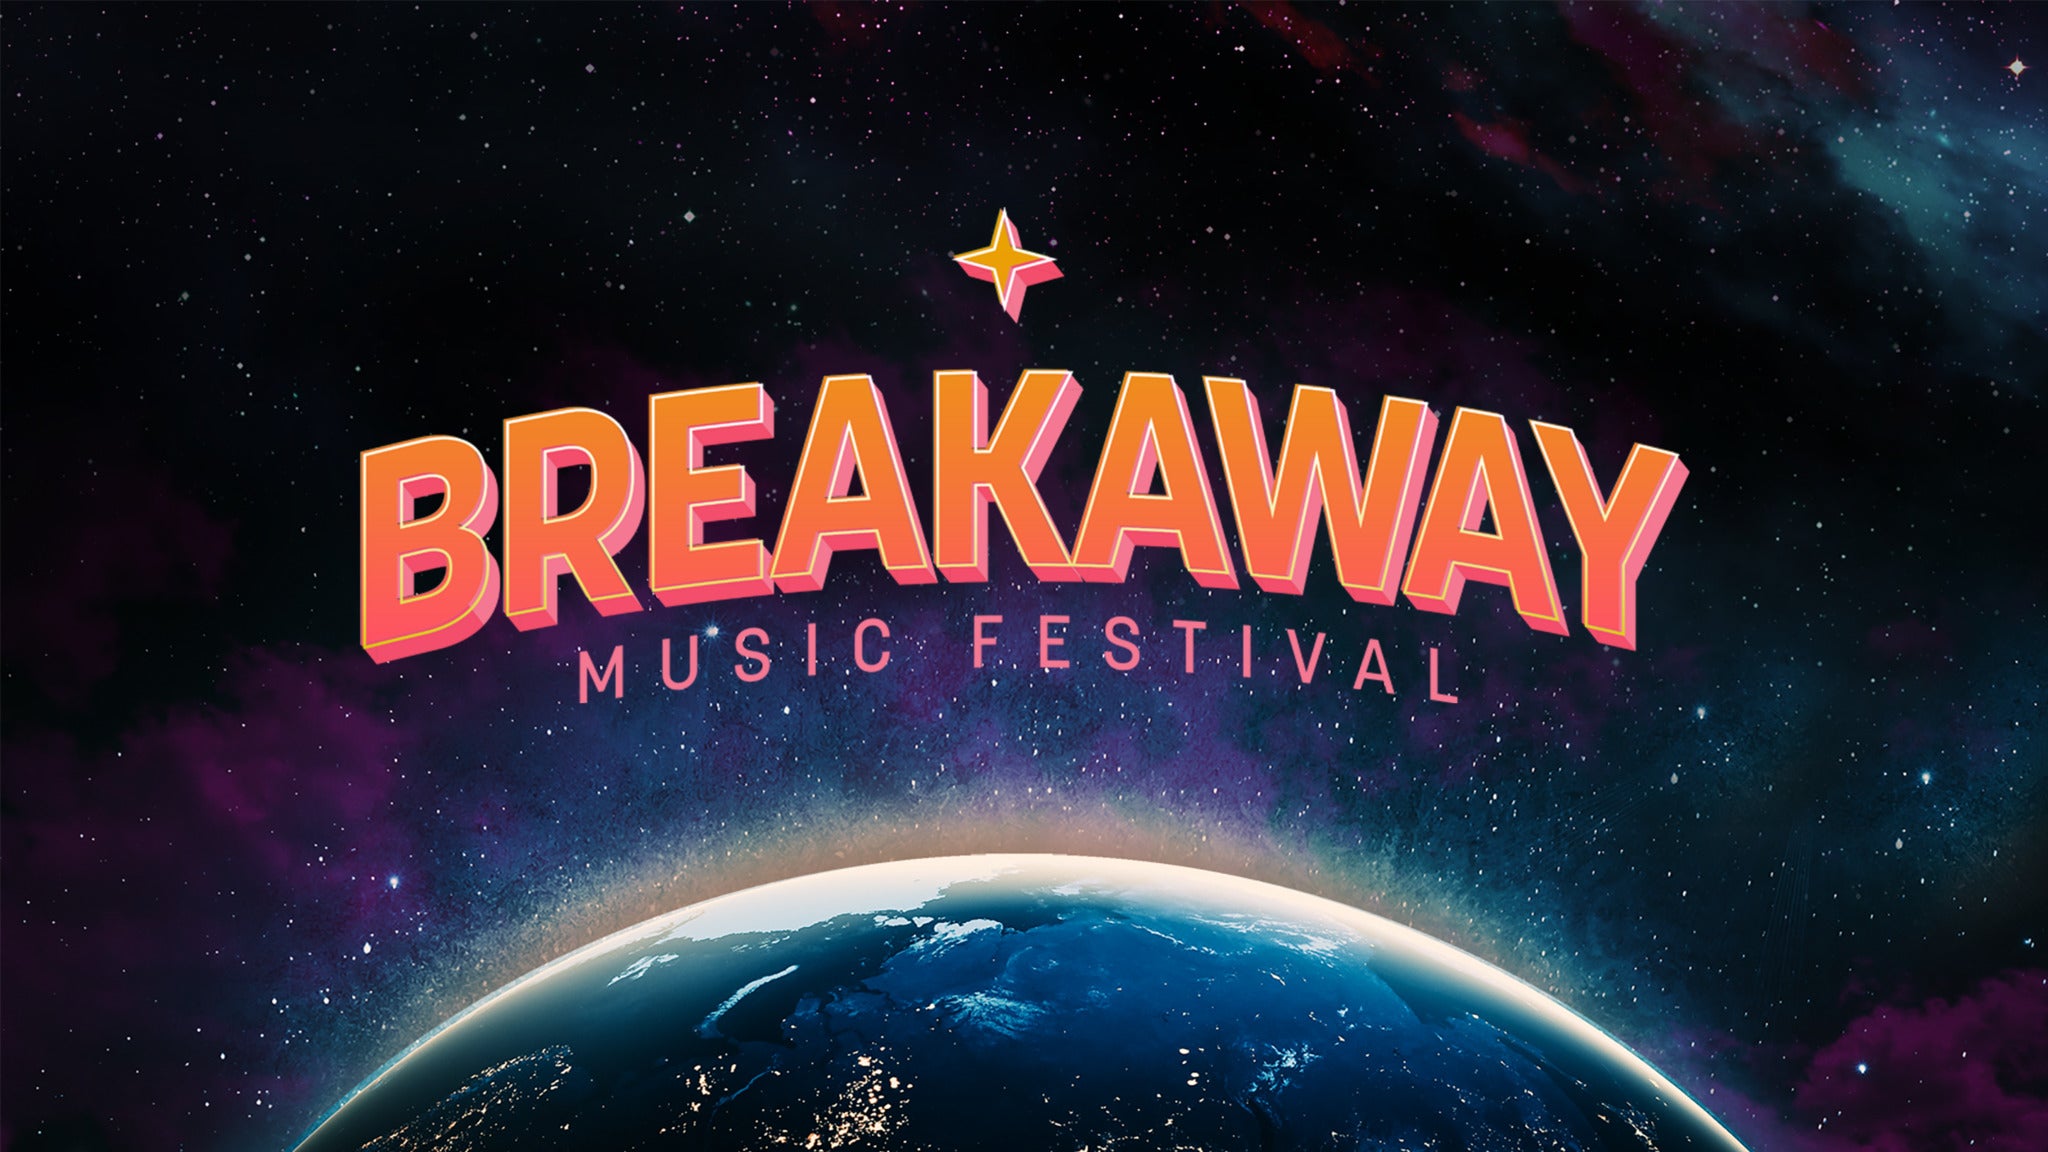 Breakaway Music Festival - Nashville Tickets, 2022 Concert Tour Dates | Ticketmaster